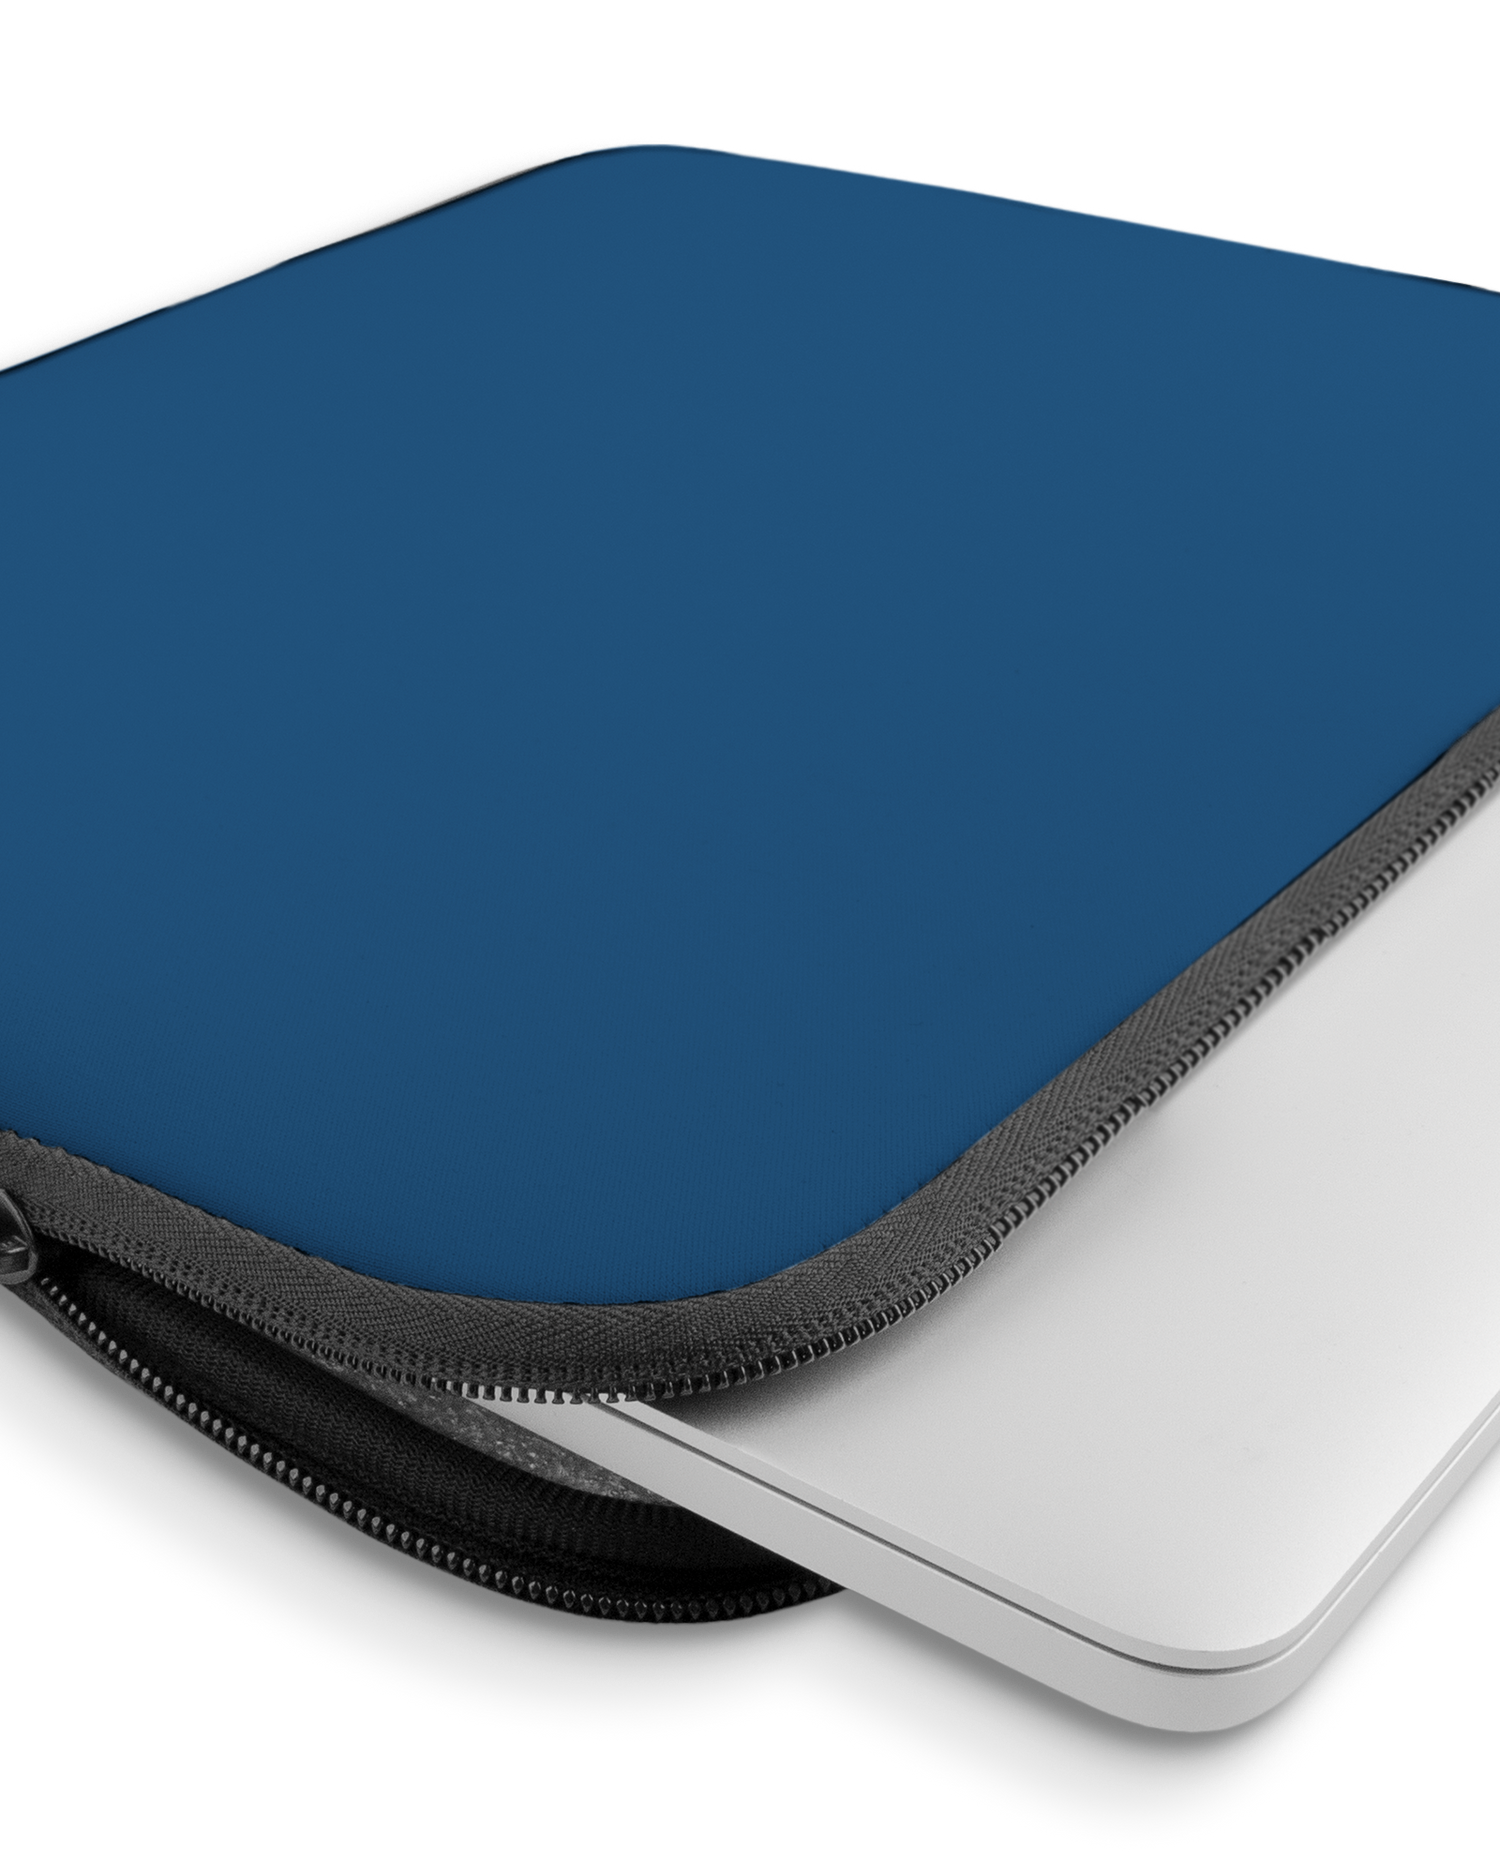 CLASSIC BLUE Laptophülle 15 Zoll mit Gerät im Inneren